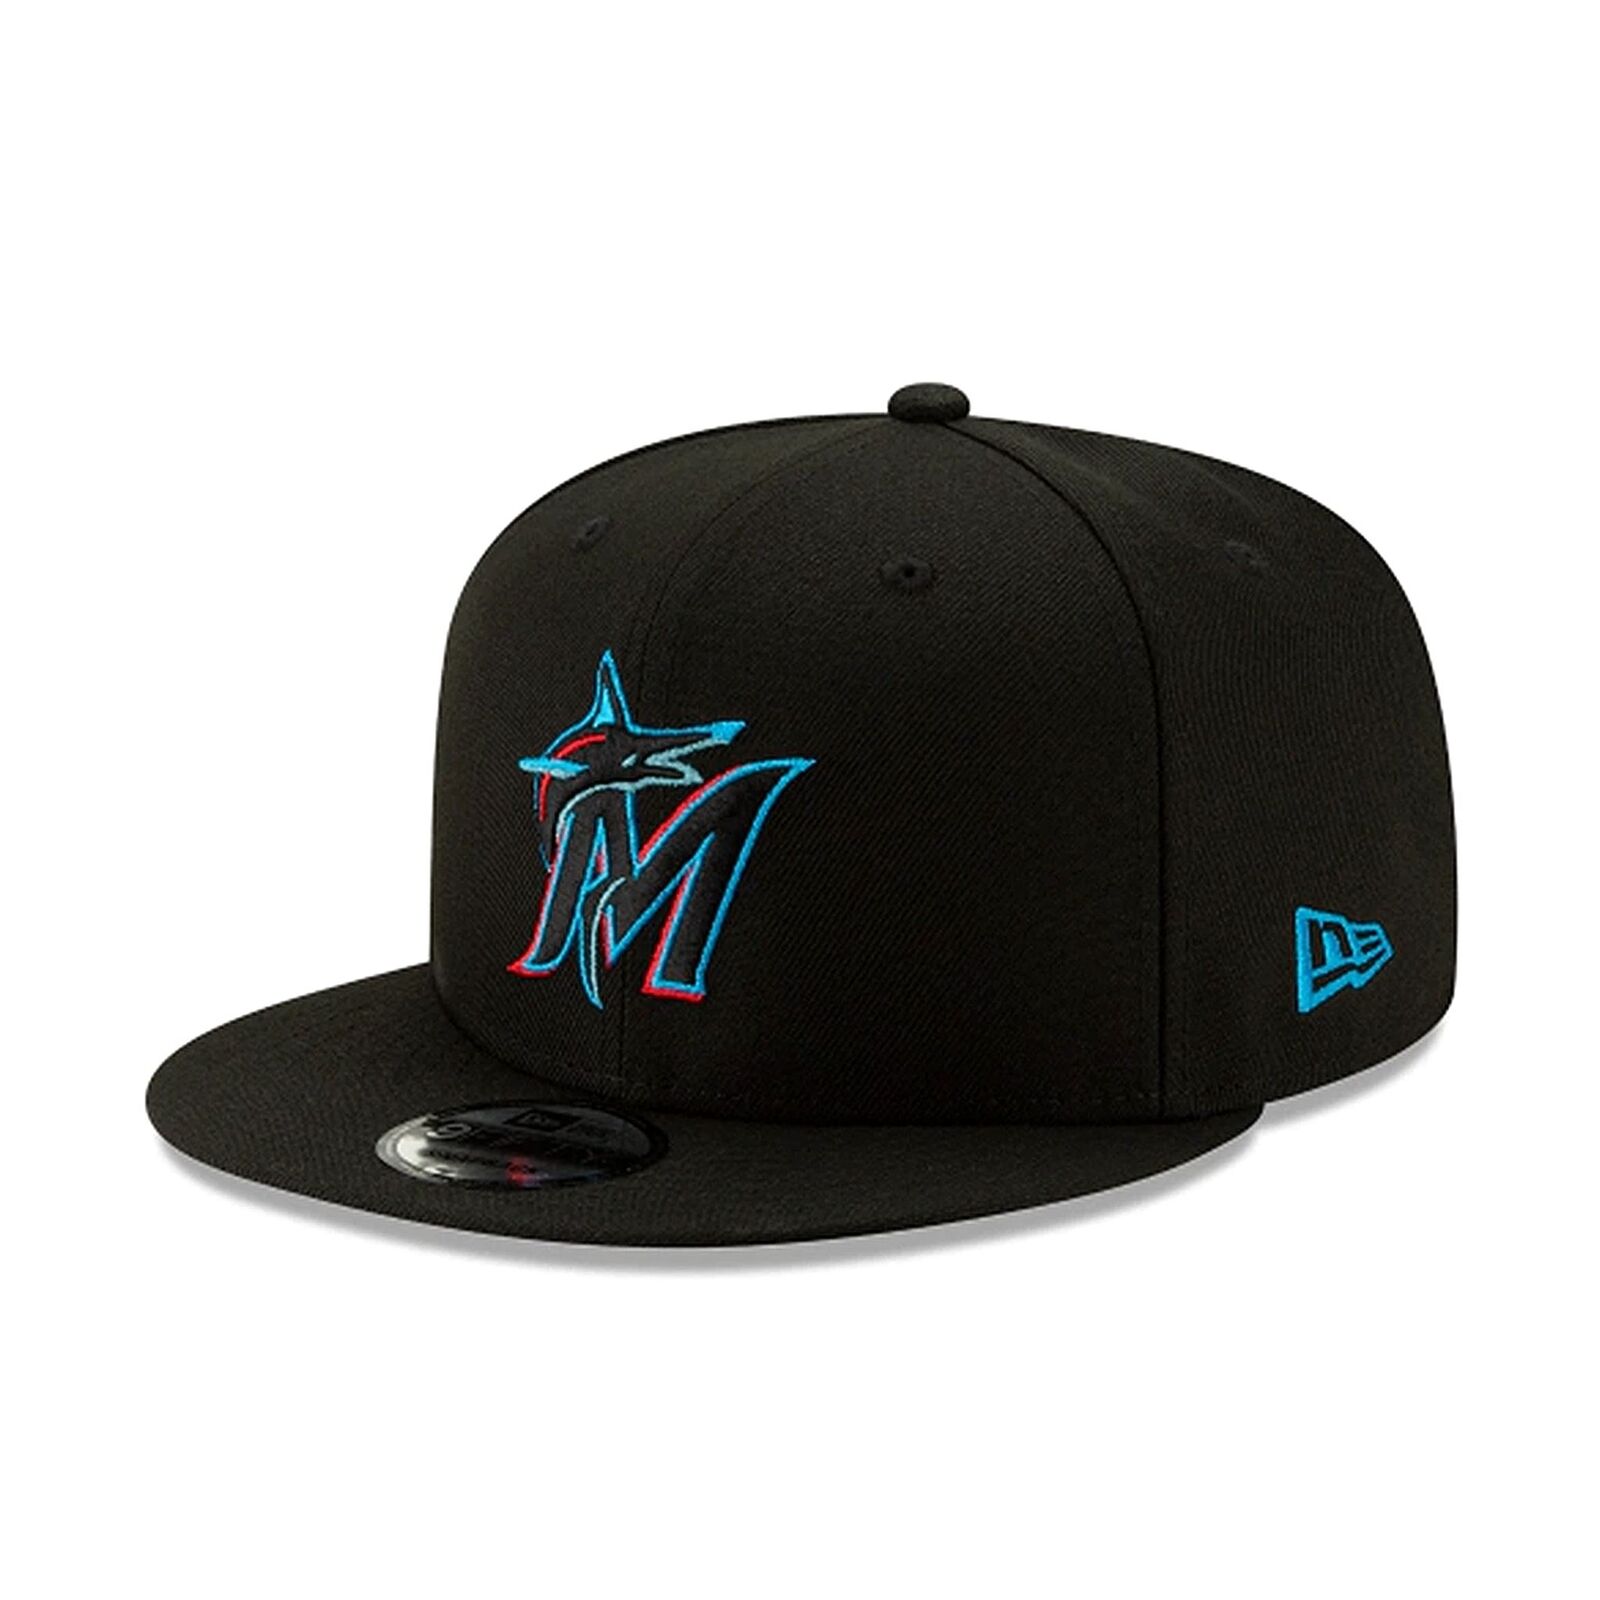 [11875066] Mens New Era MLB 9FIFTY Snapback - Miami Marlins